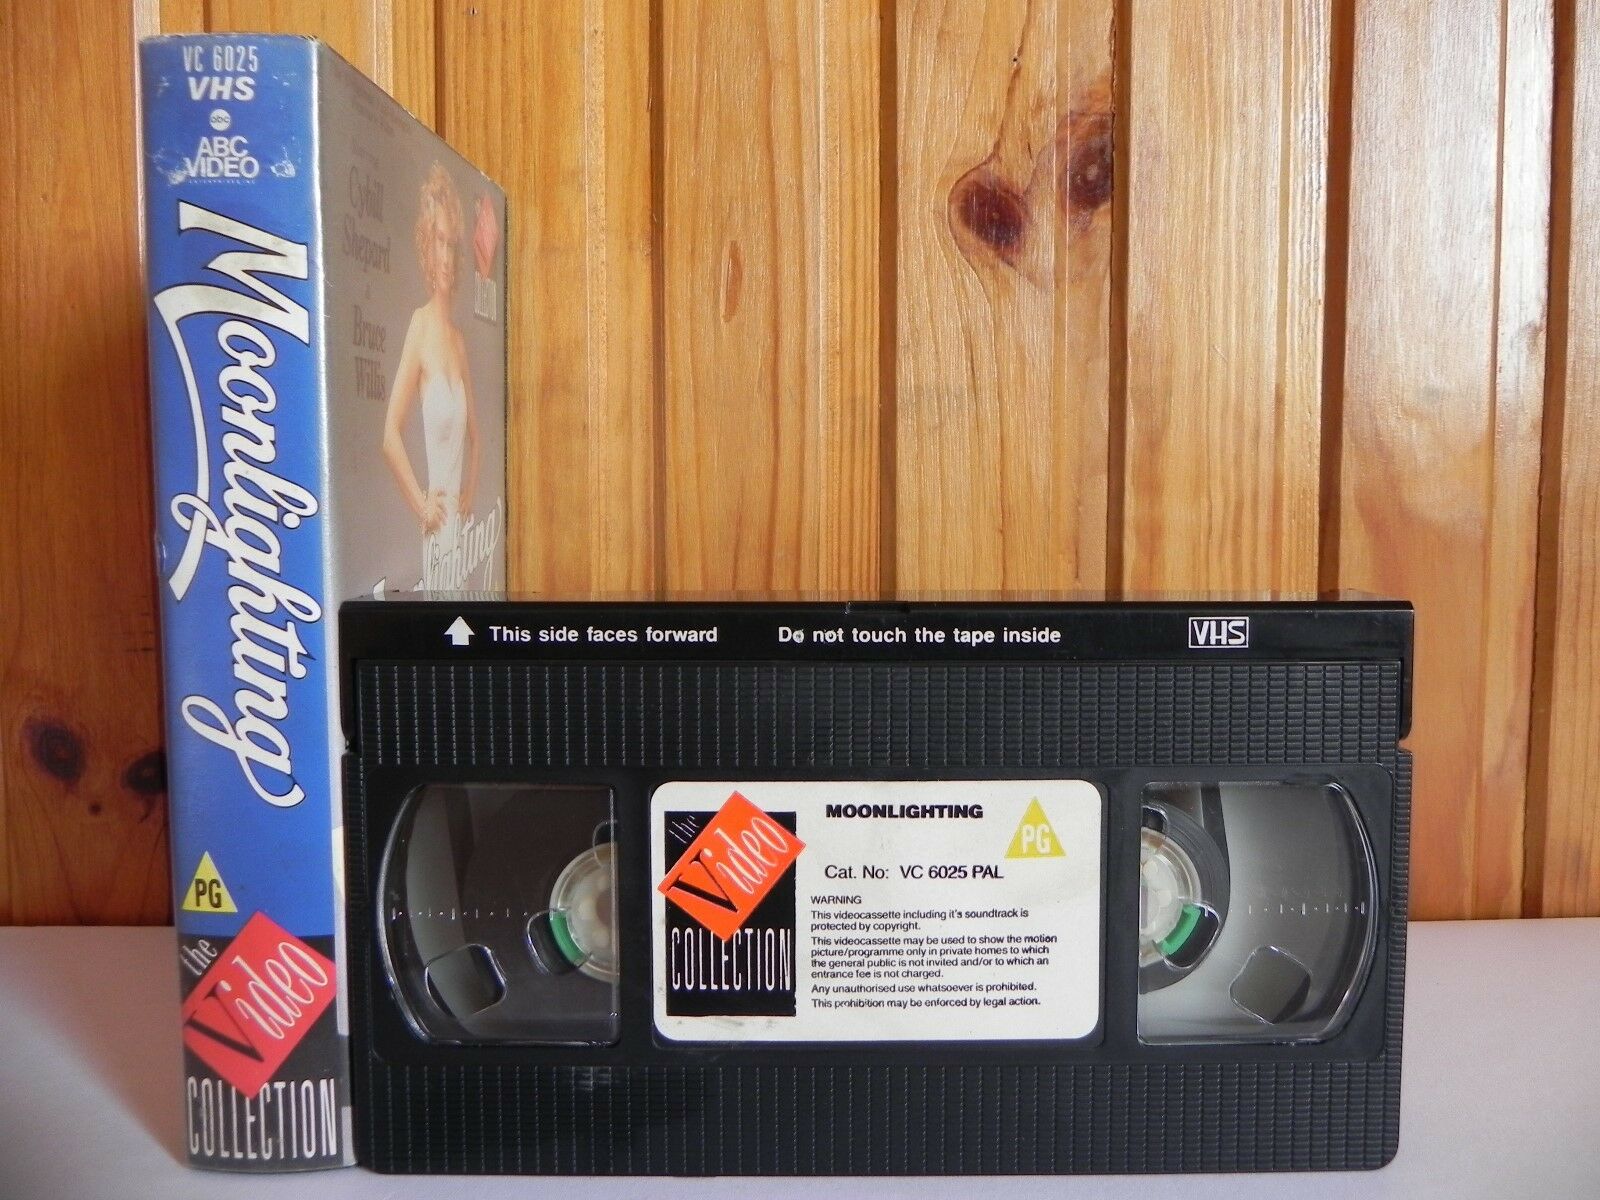 Moonlighting - ABC Video - Comedy - Action - Cybill Shepard - Bruce Willis - VHS-